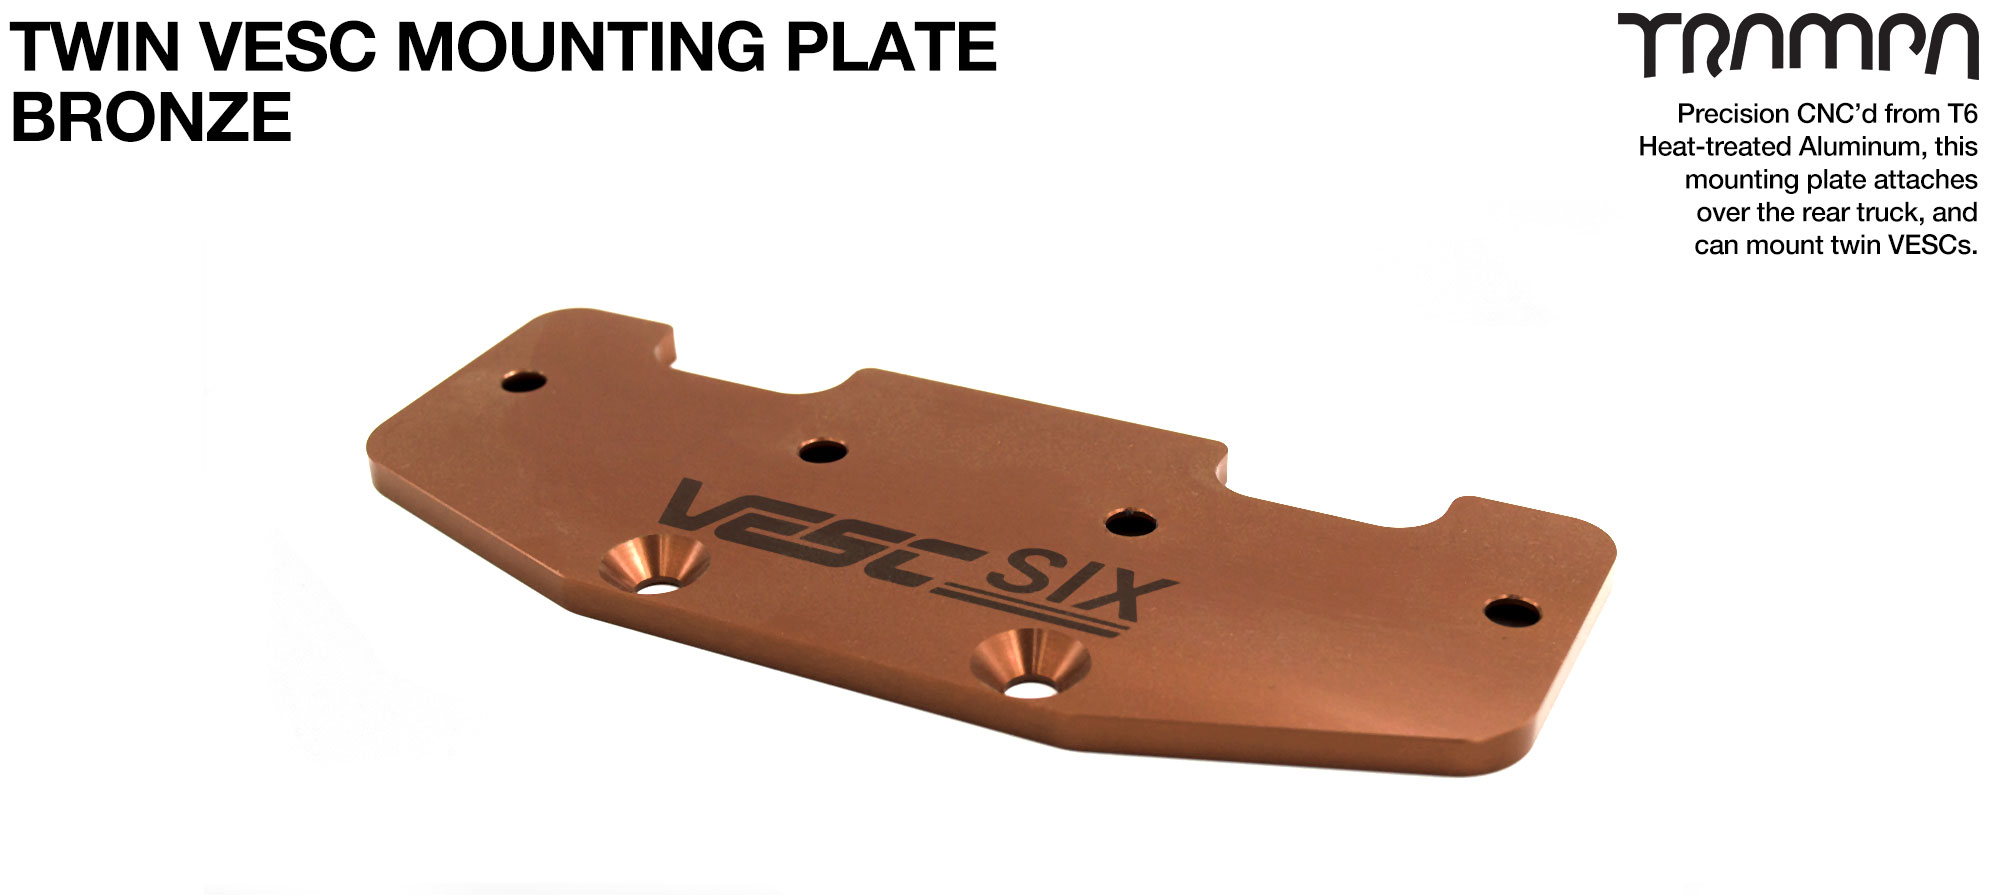 TWIN VESC 6 Aluminium Mounting Plate - BRONZE 